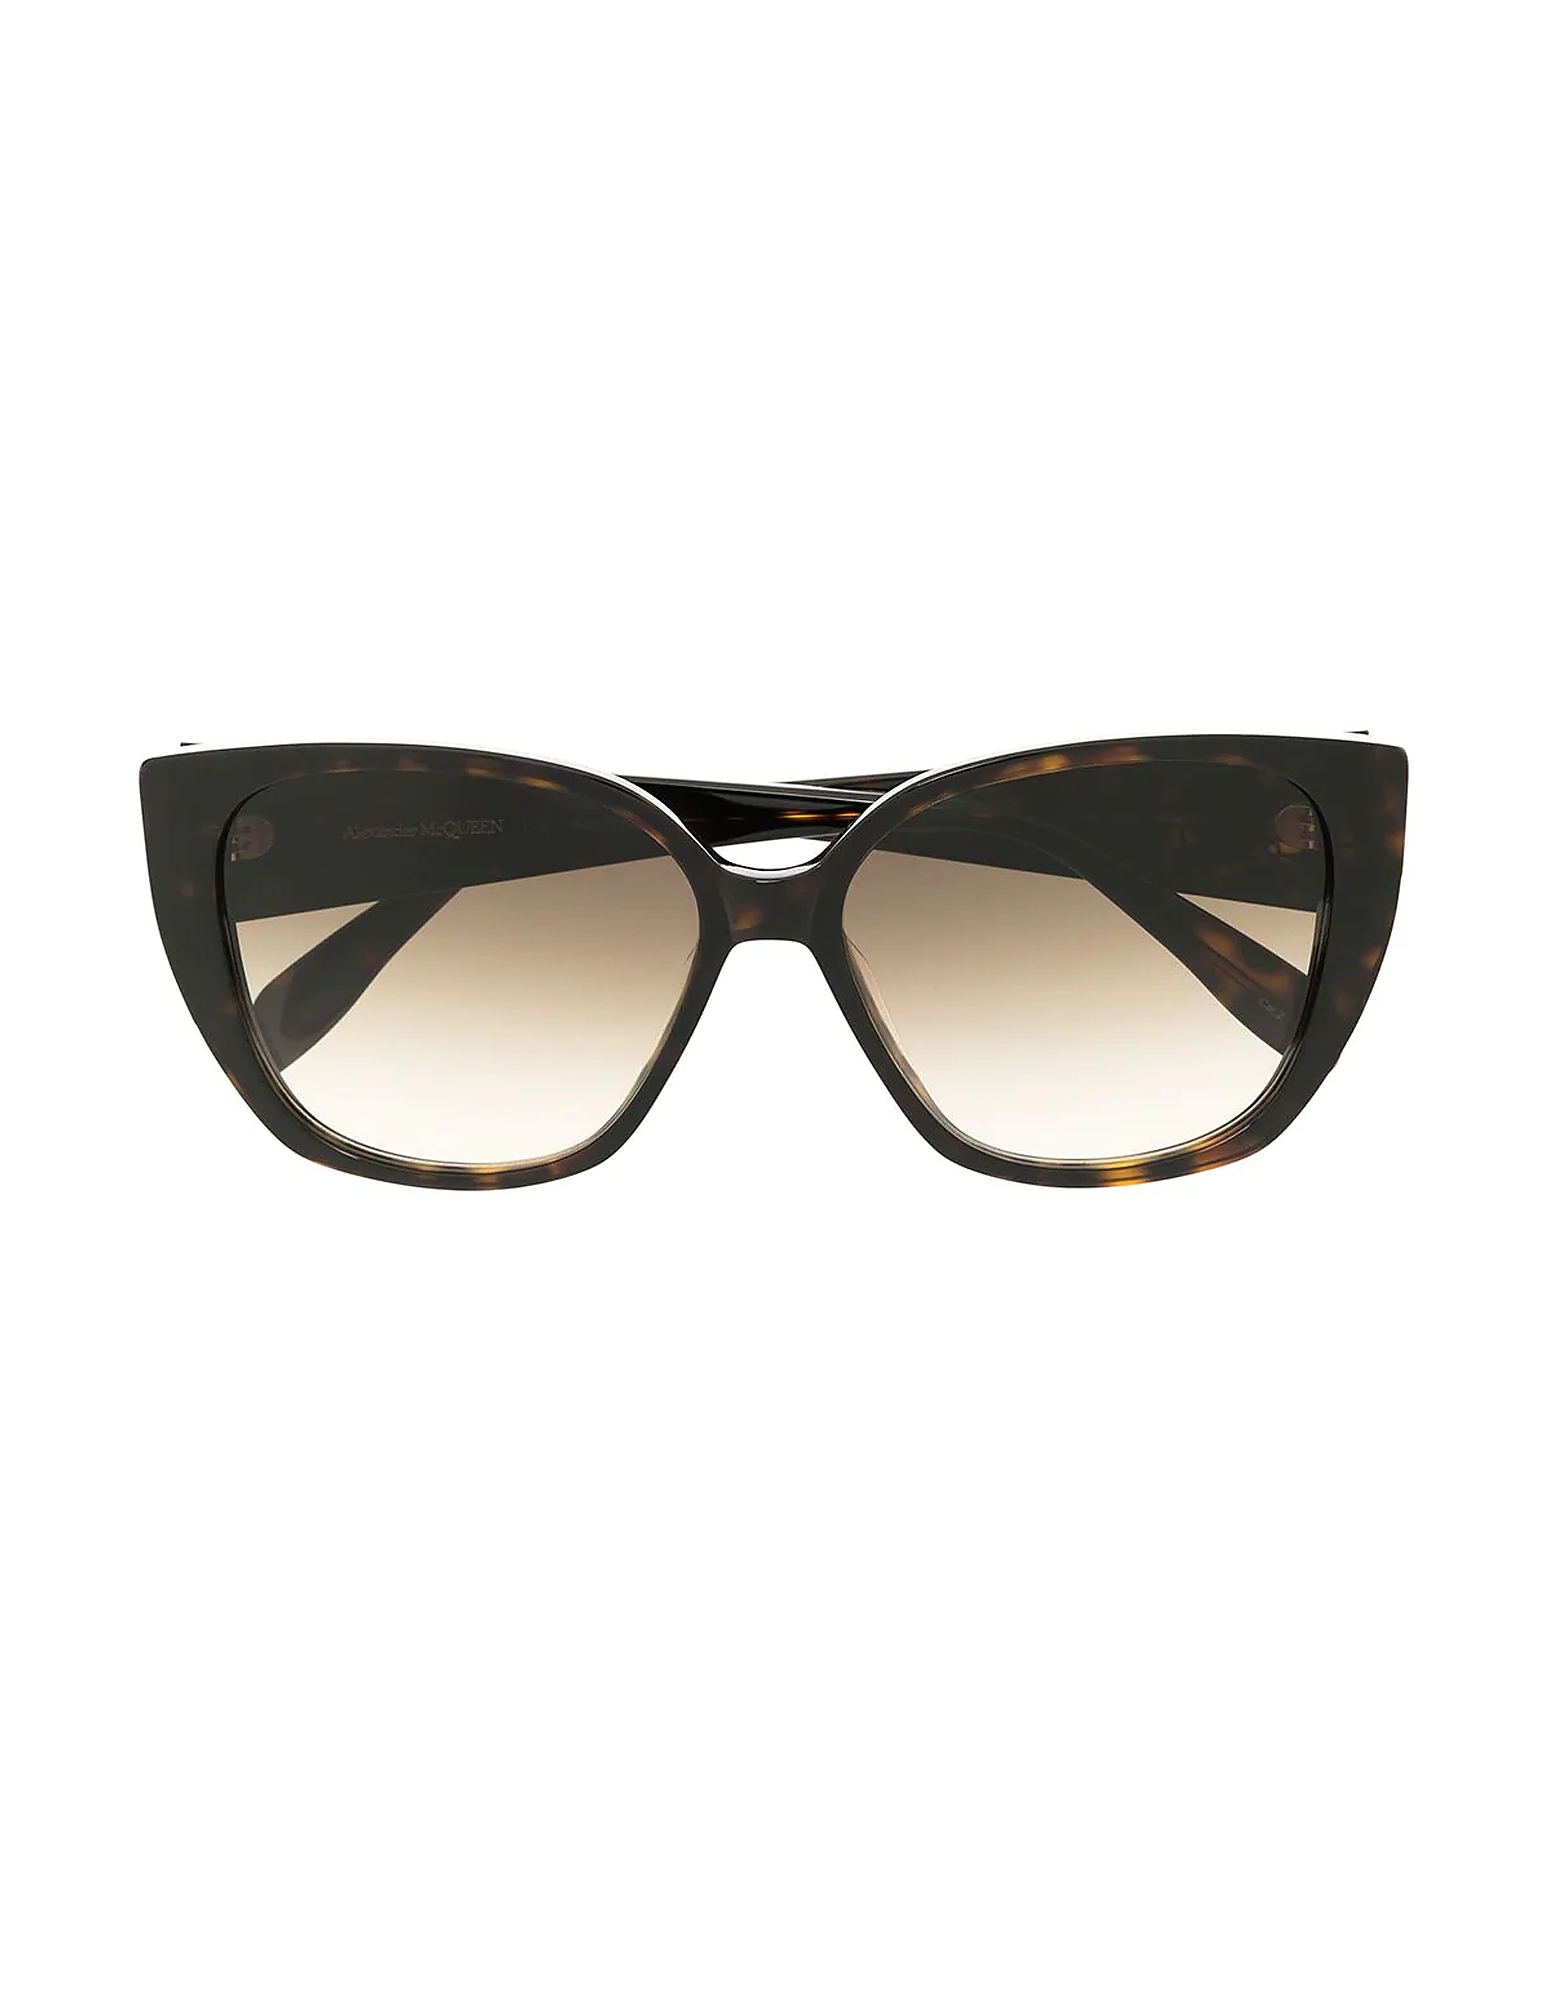 Alexander McQueen Sunglasses AM0284S Havana/Brown Acetate Cat-Eye Frame Women's Sunglasses